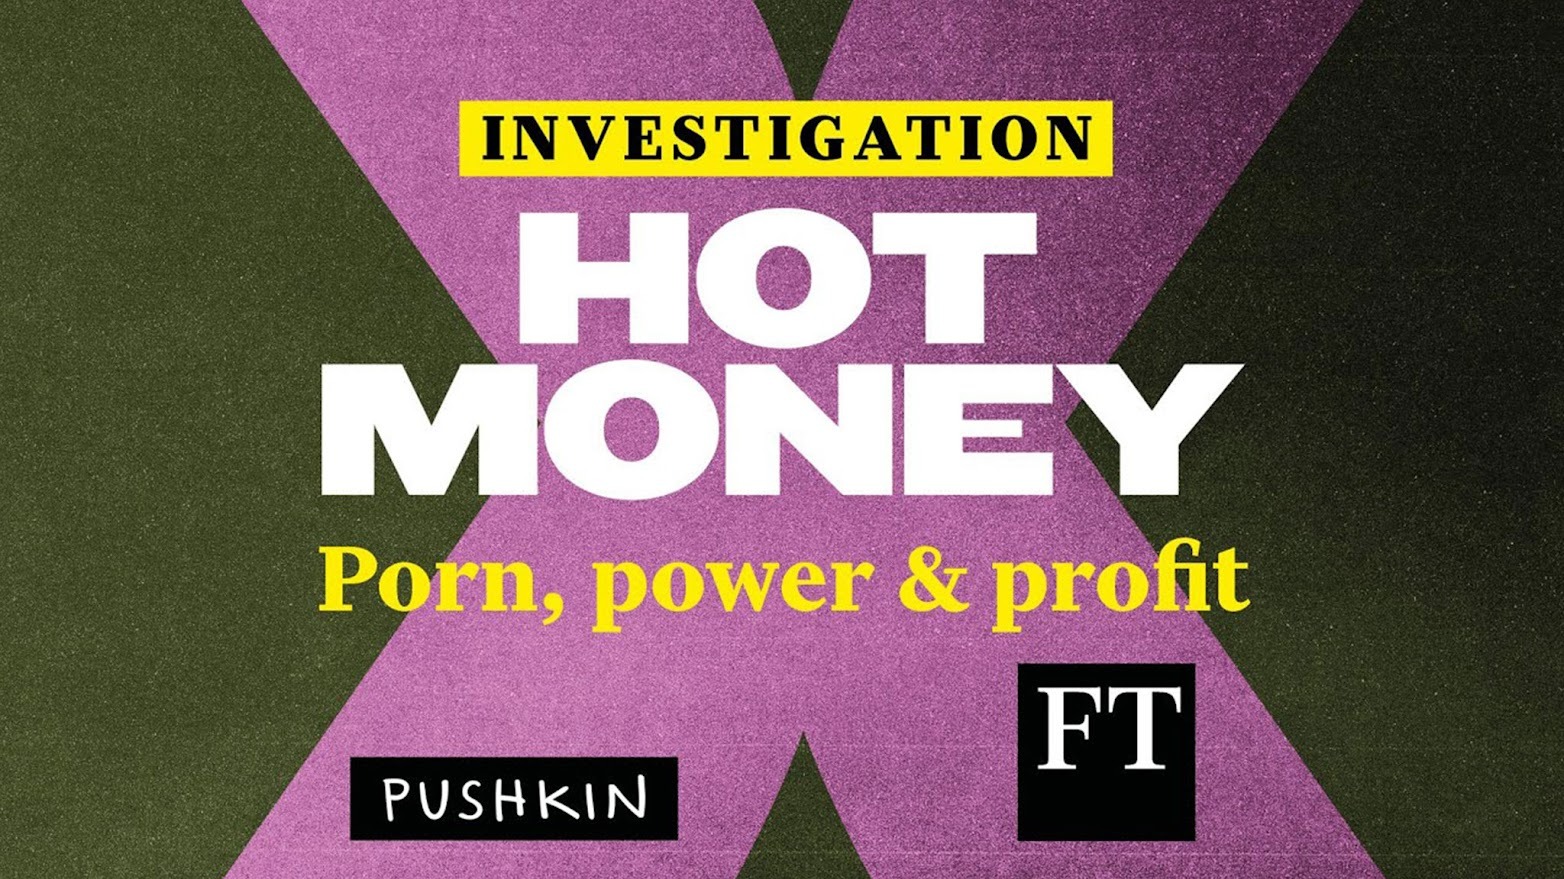 Seel Broken Xxx - Knocking on the door of a porn empire | Financial Times